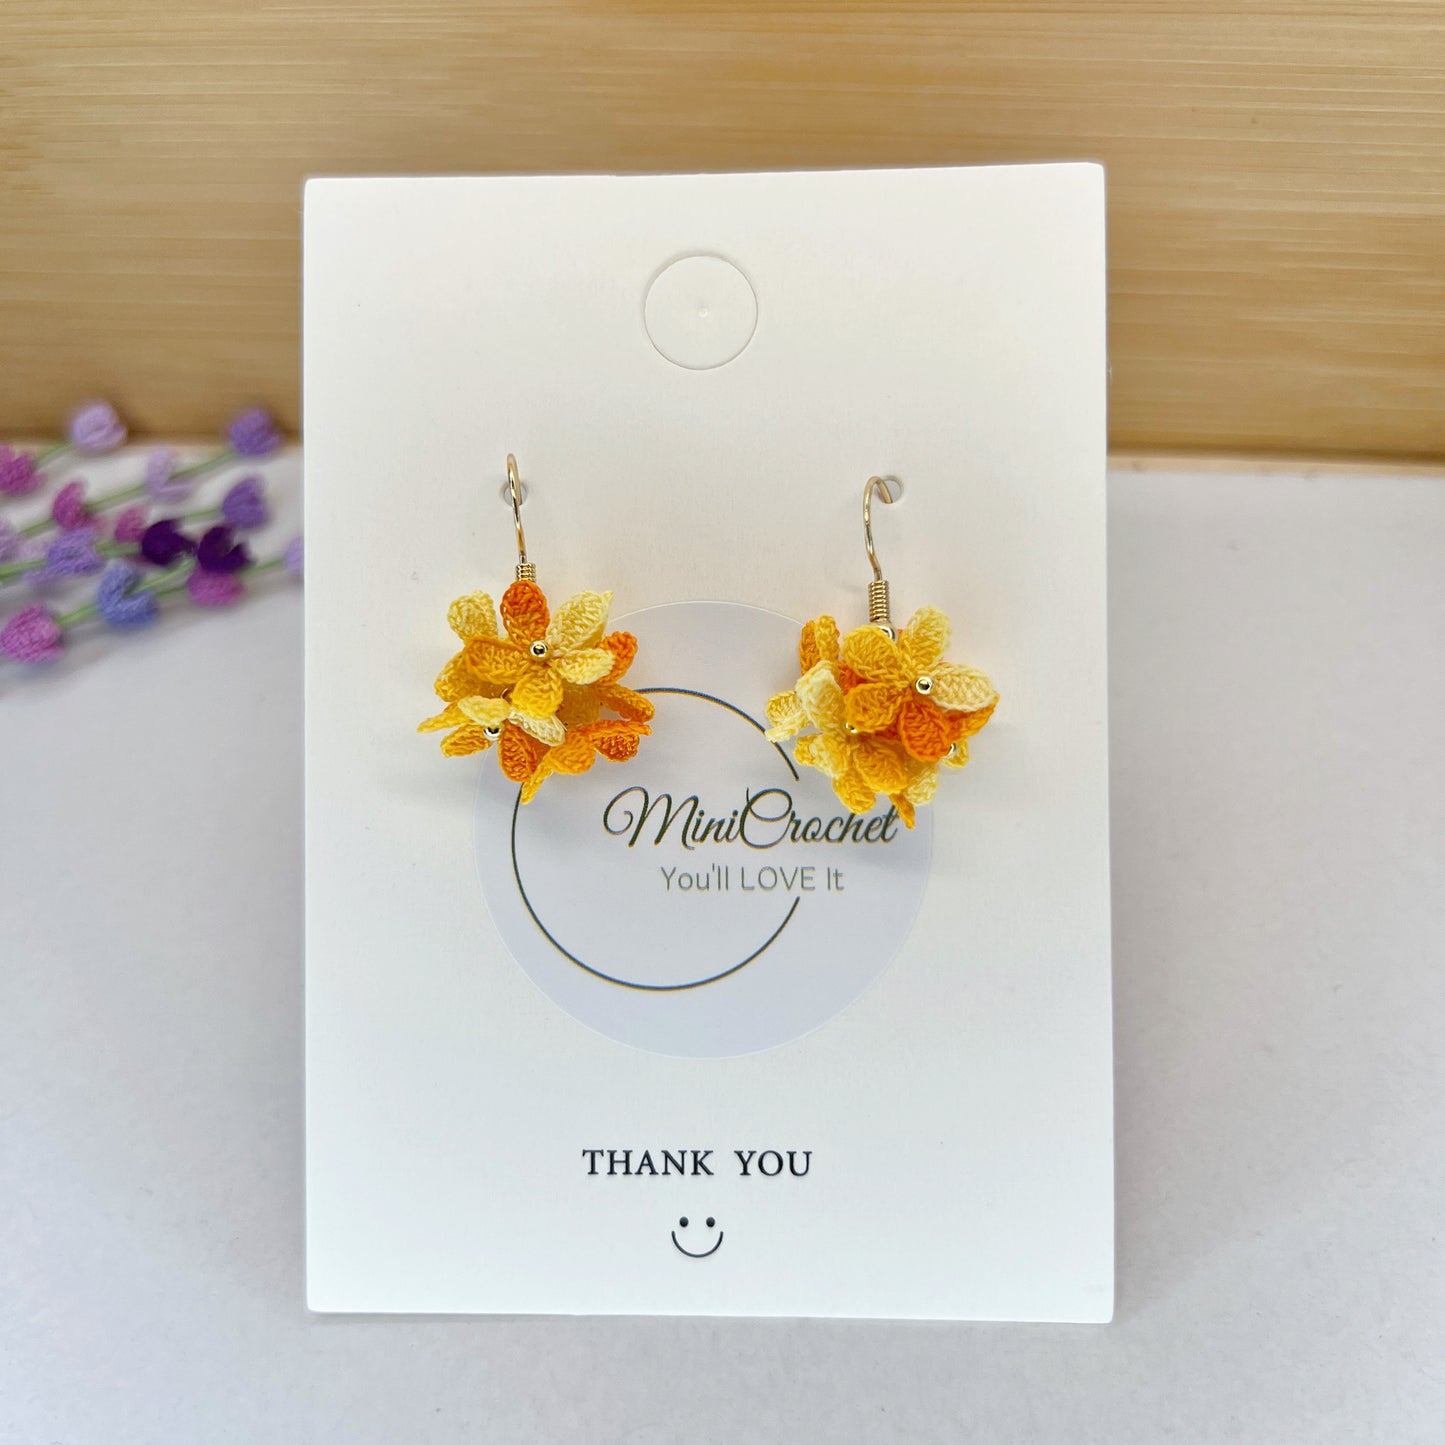 Micro Crochet Earrings | Crochet Flower Dangles | Handmade Earrings | Unique Gifts for Her